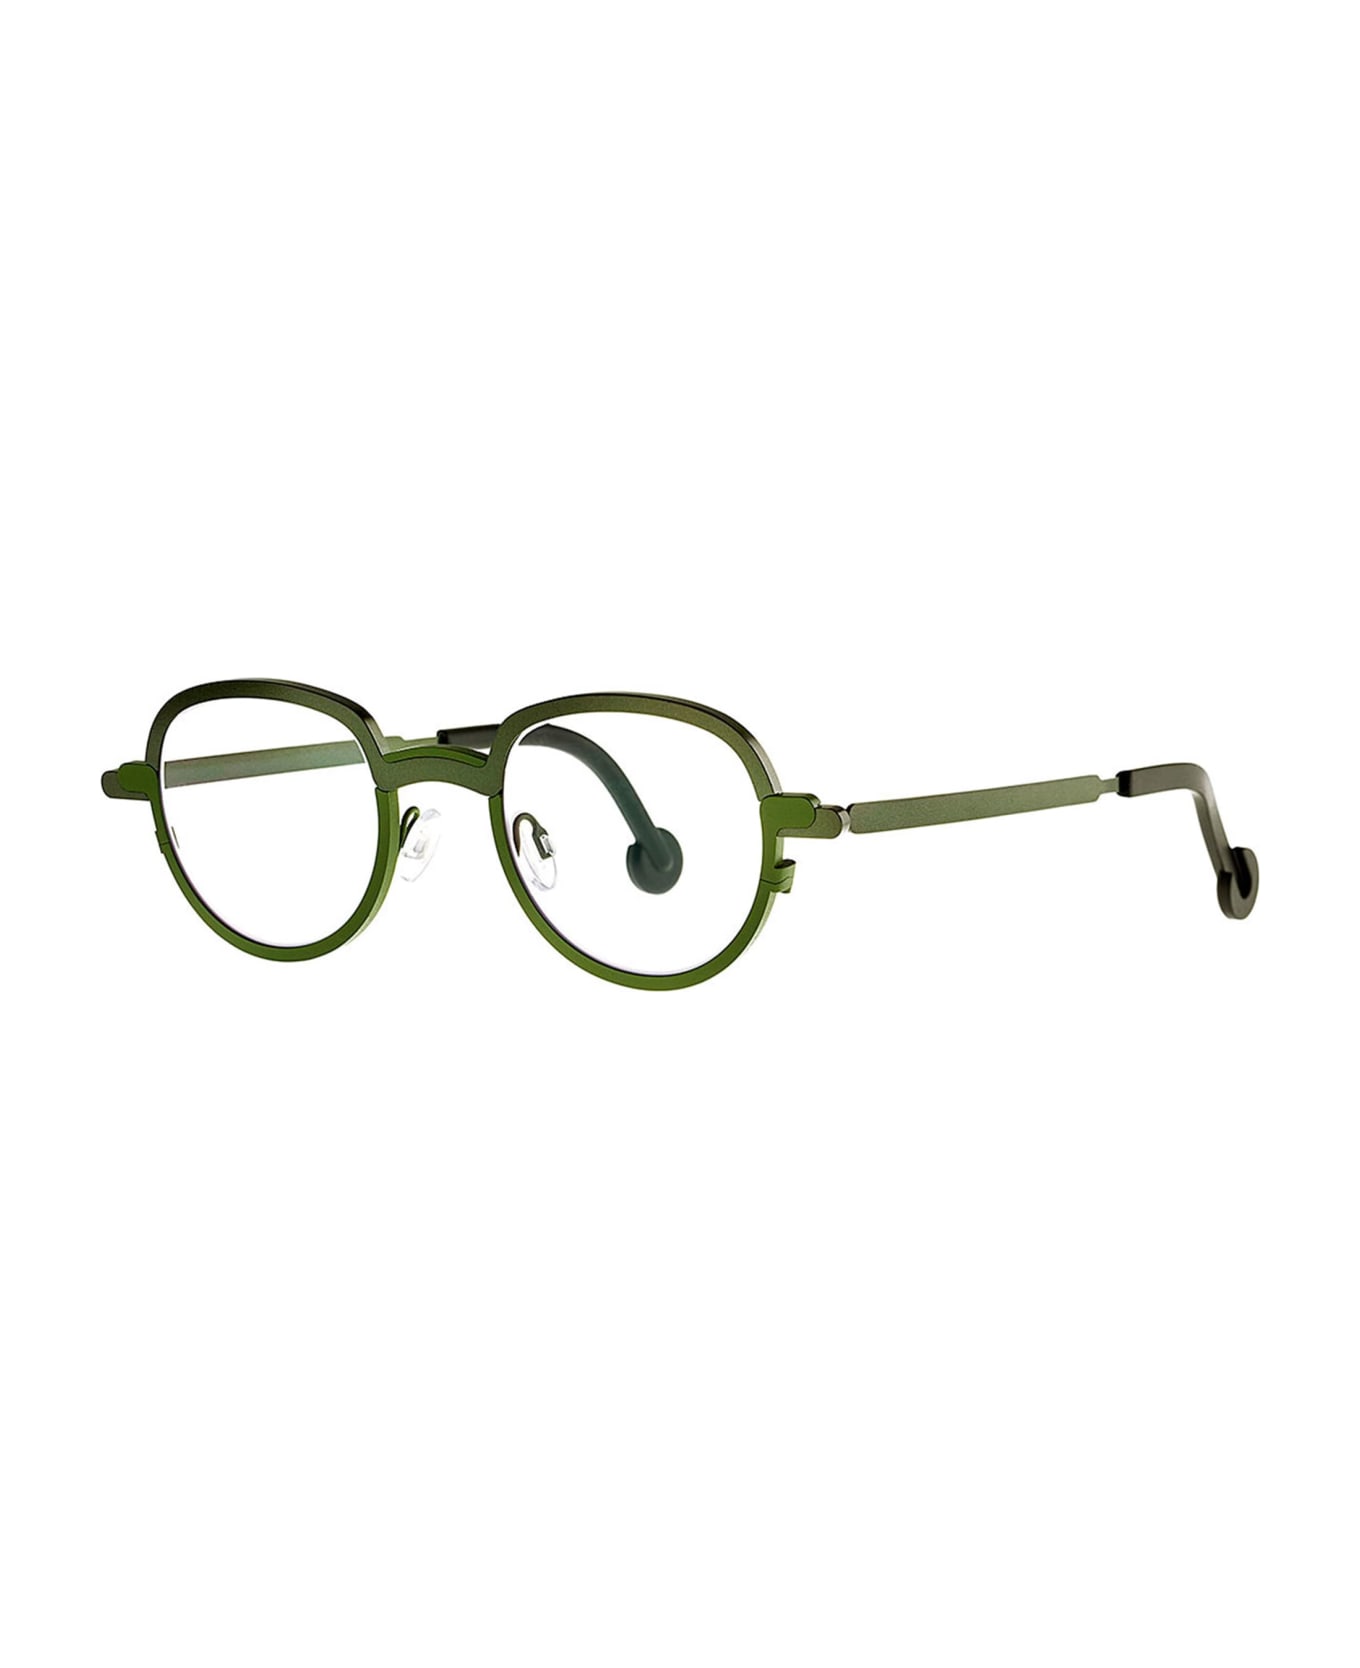 Theo Eyewear Mong Kok - 485 Rx Glasses - green